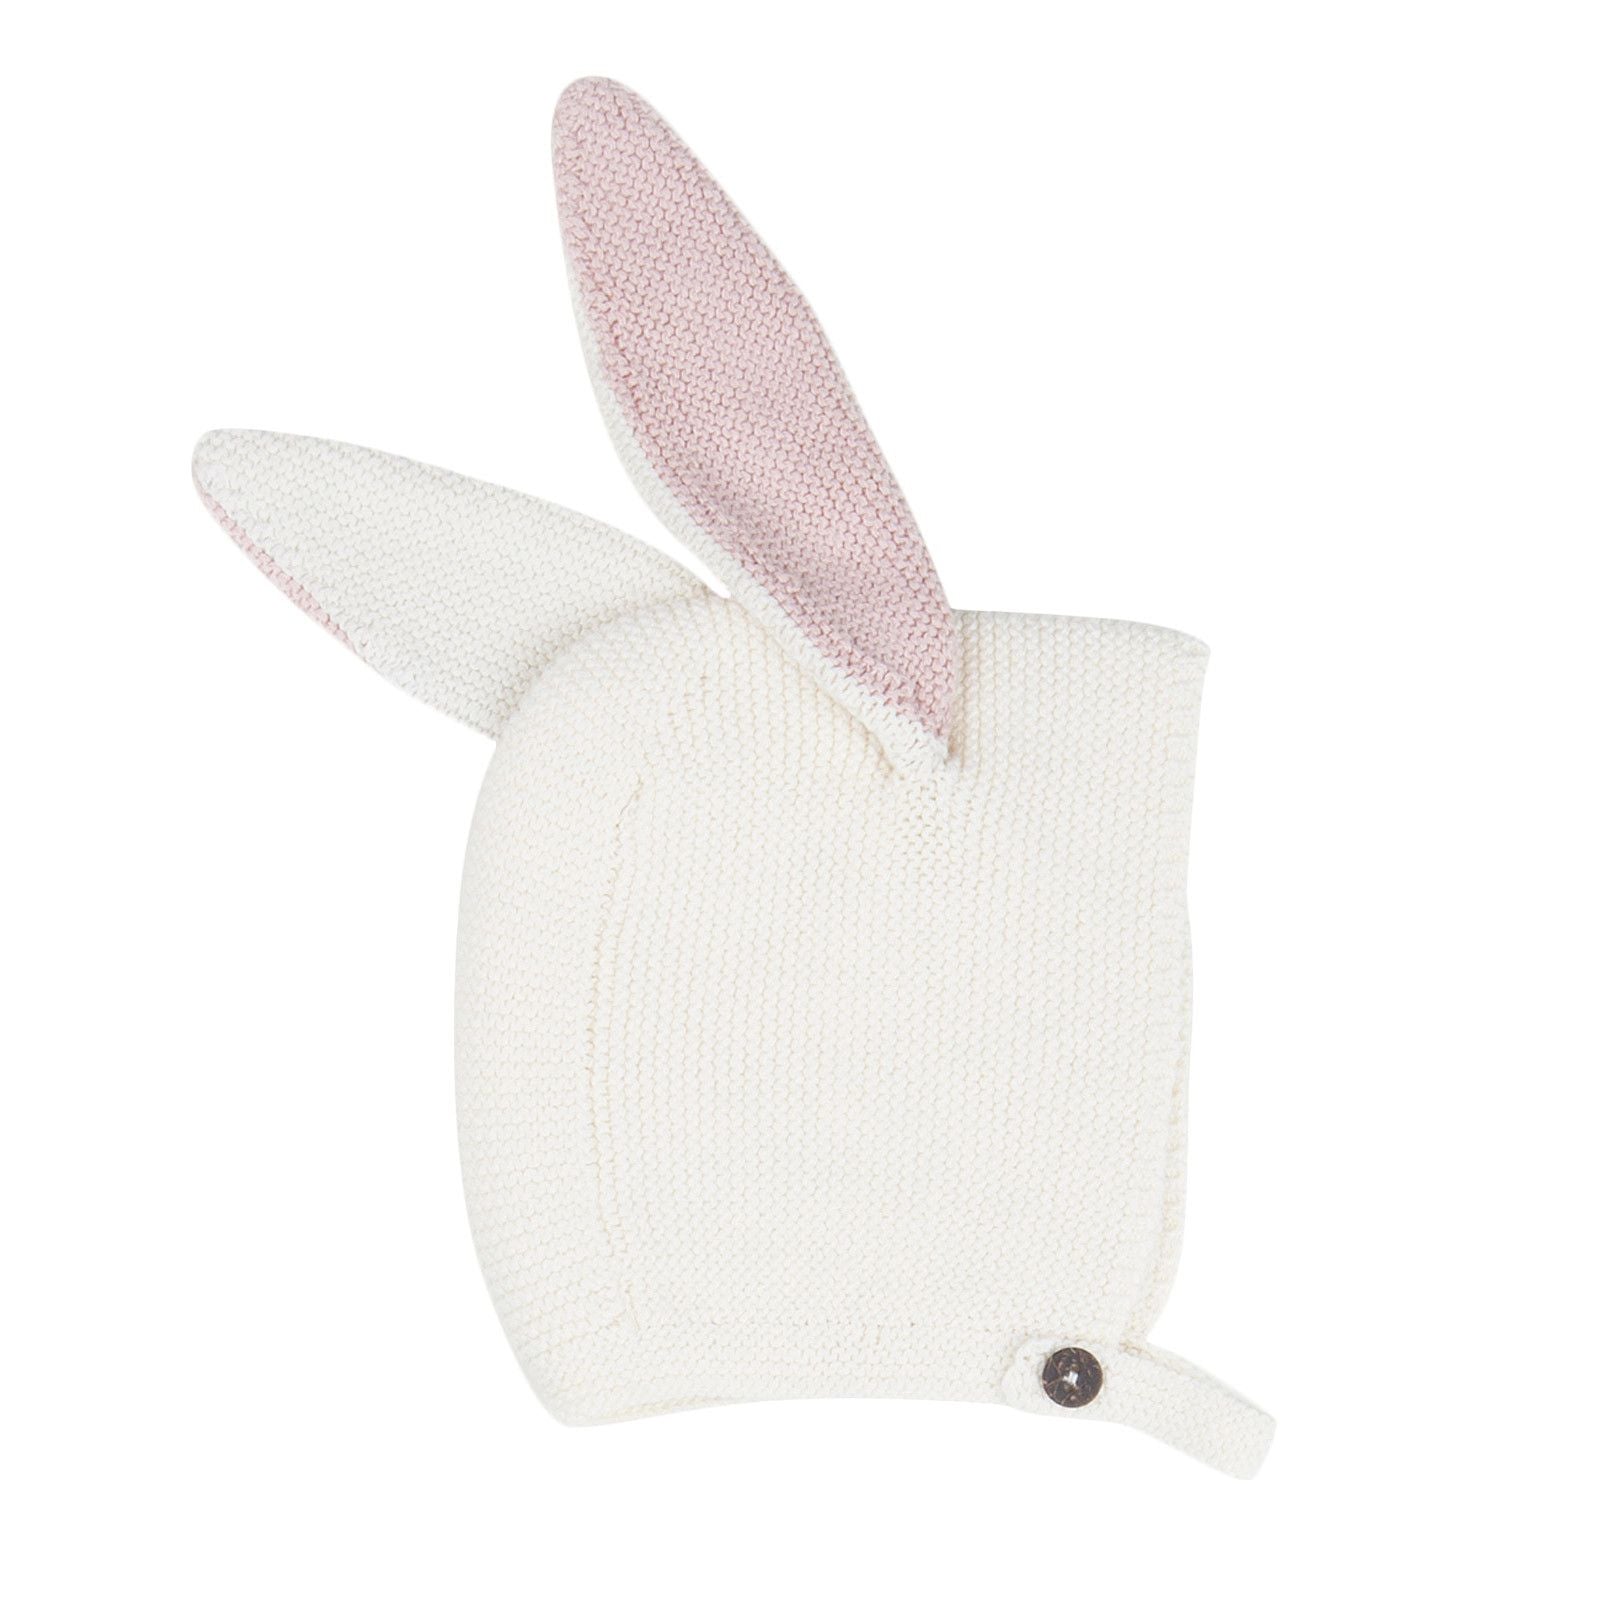 Baby White Alpaga Wool Bunny Ears Earflaps Hats - CÉMAROSE | Children's Fashion Store - 1